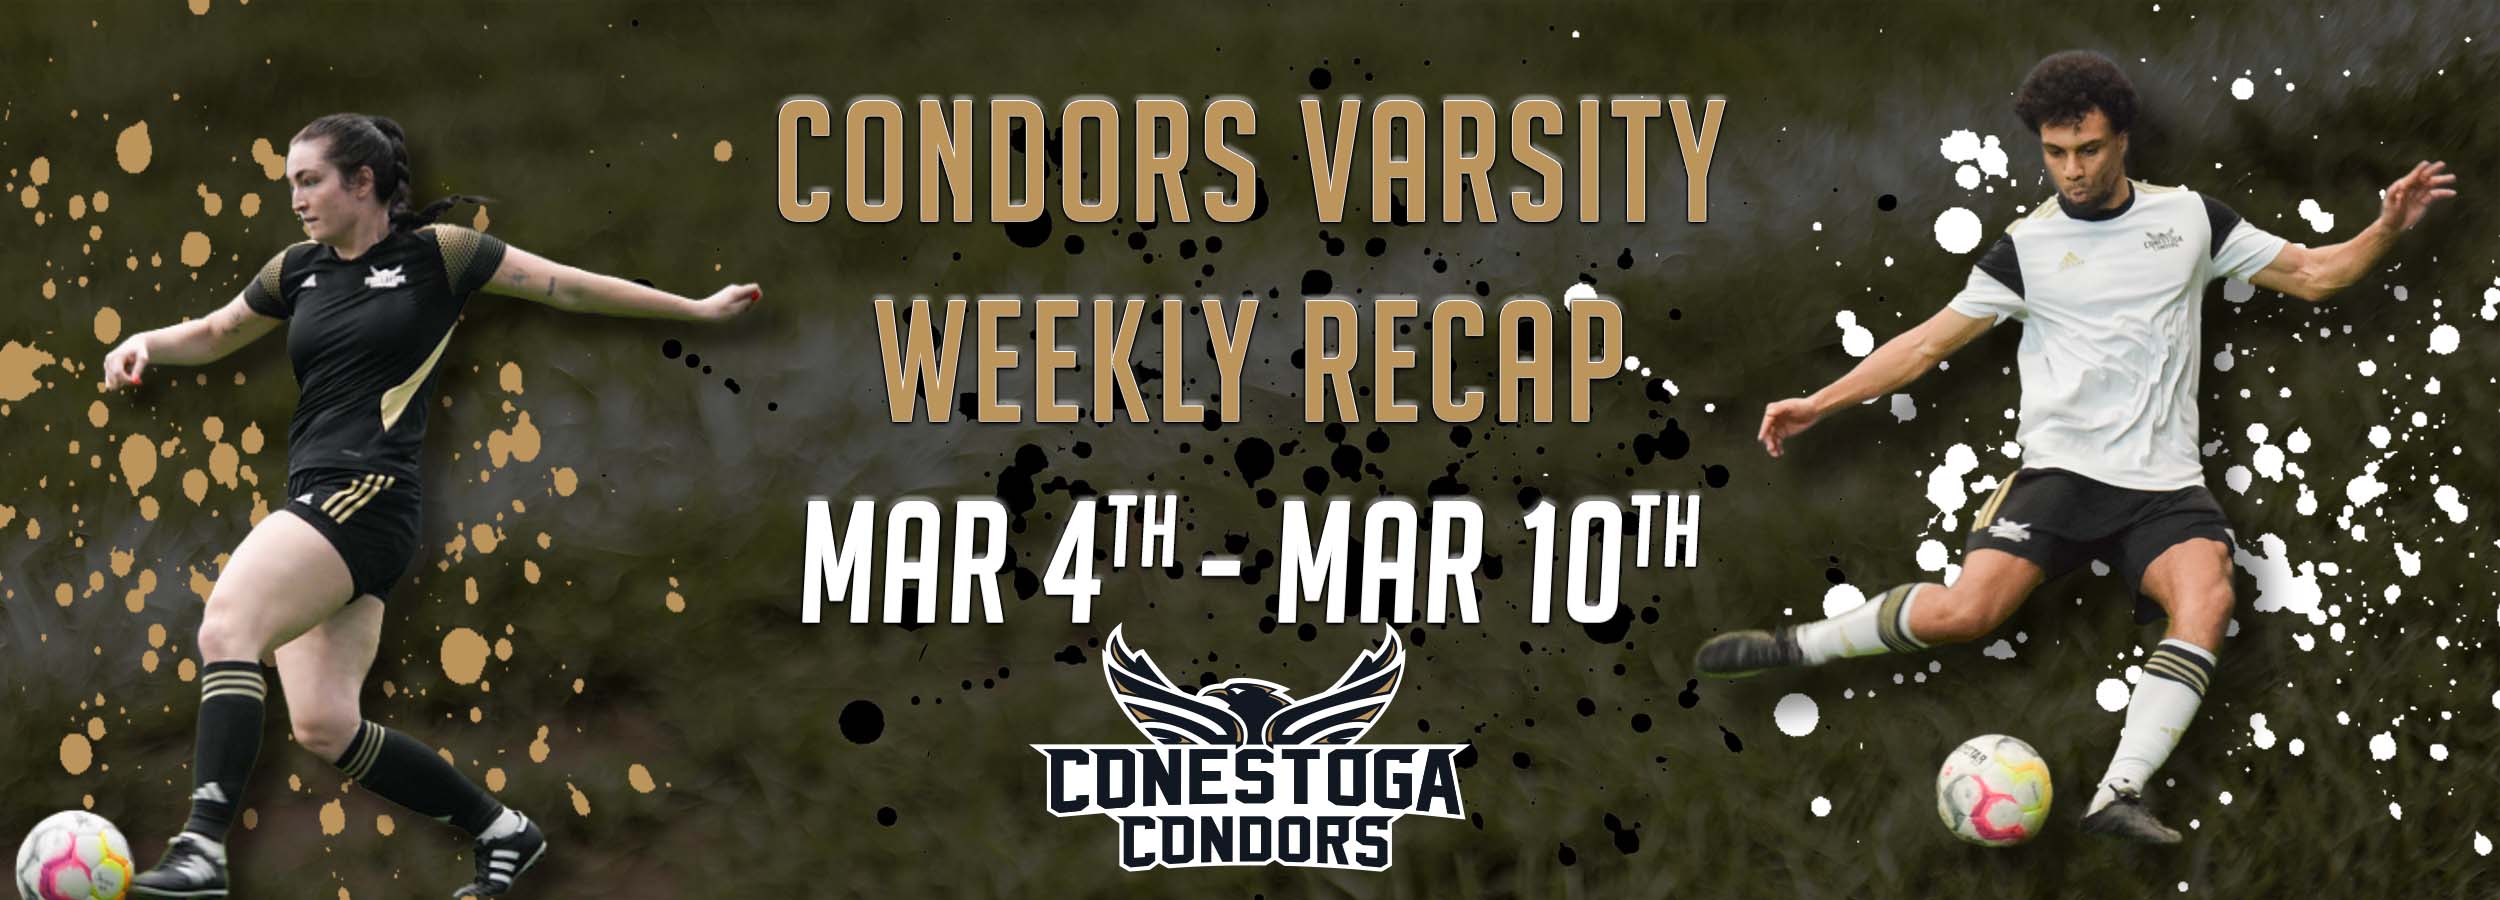 Condors Varsity Weekly Recap March 4th - March 10th